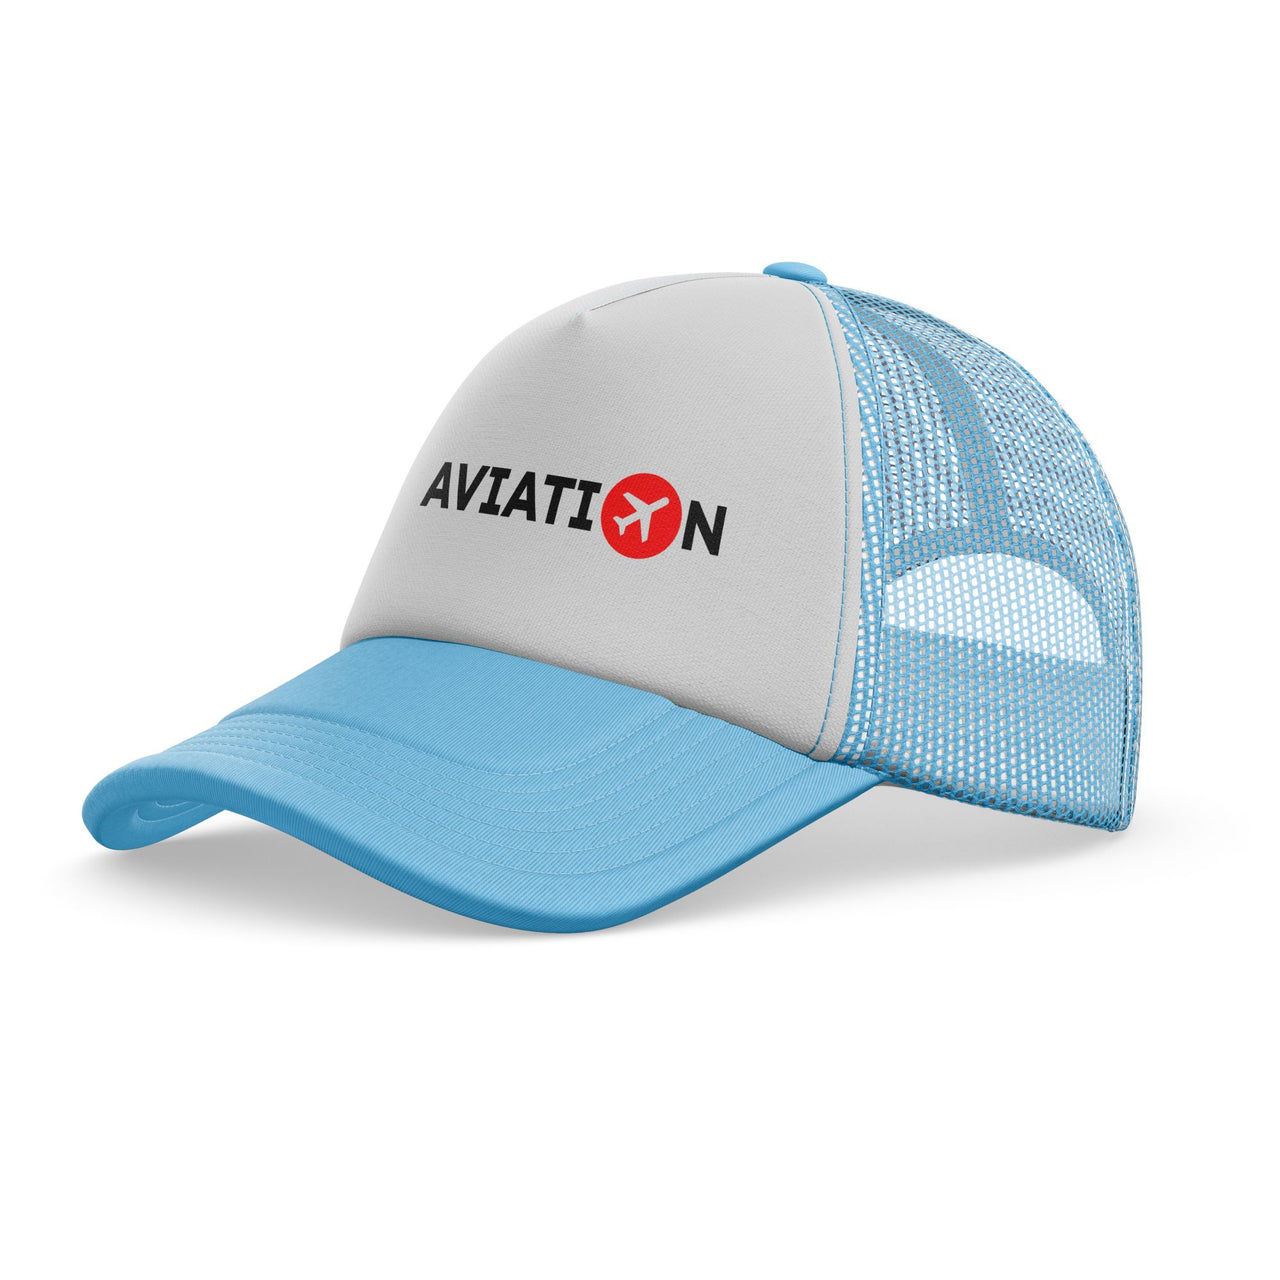 Aviation Designed Trucker Caps & Hats